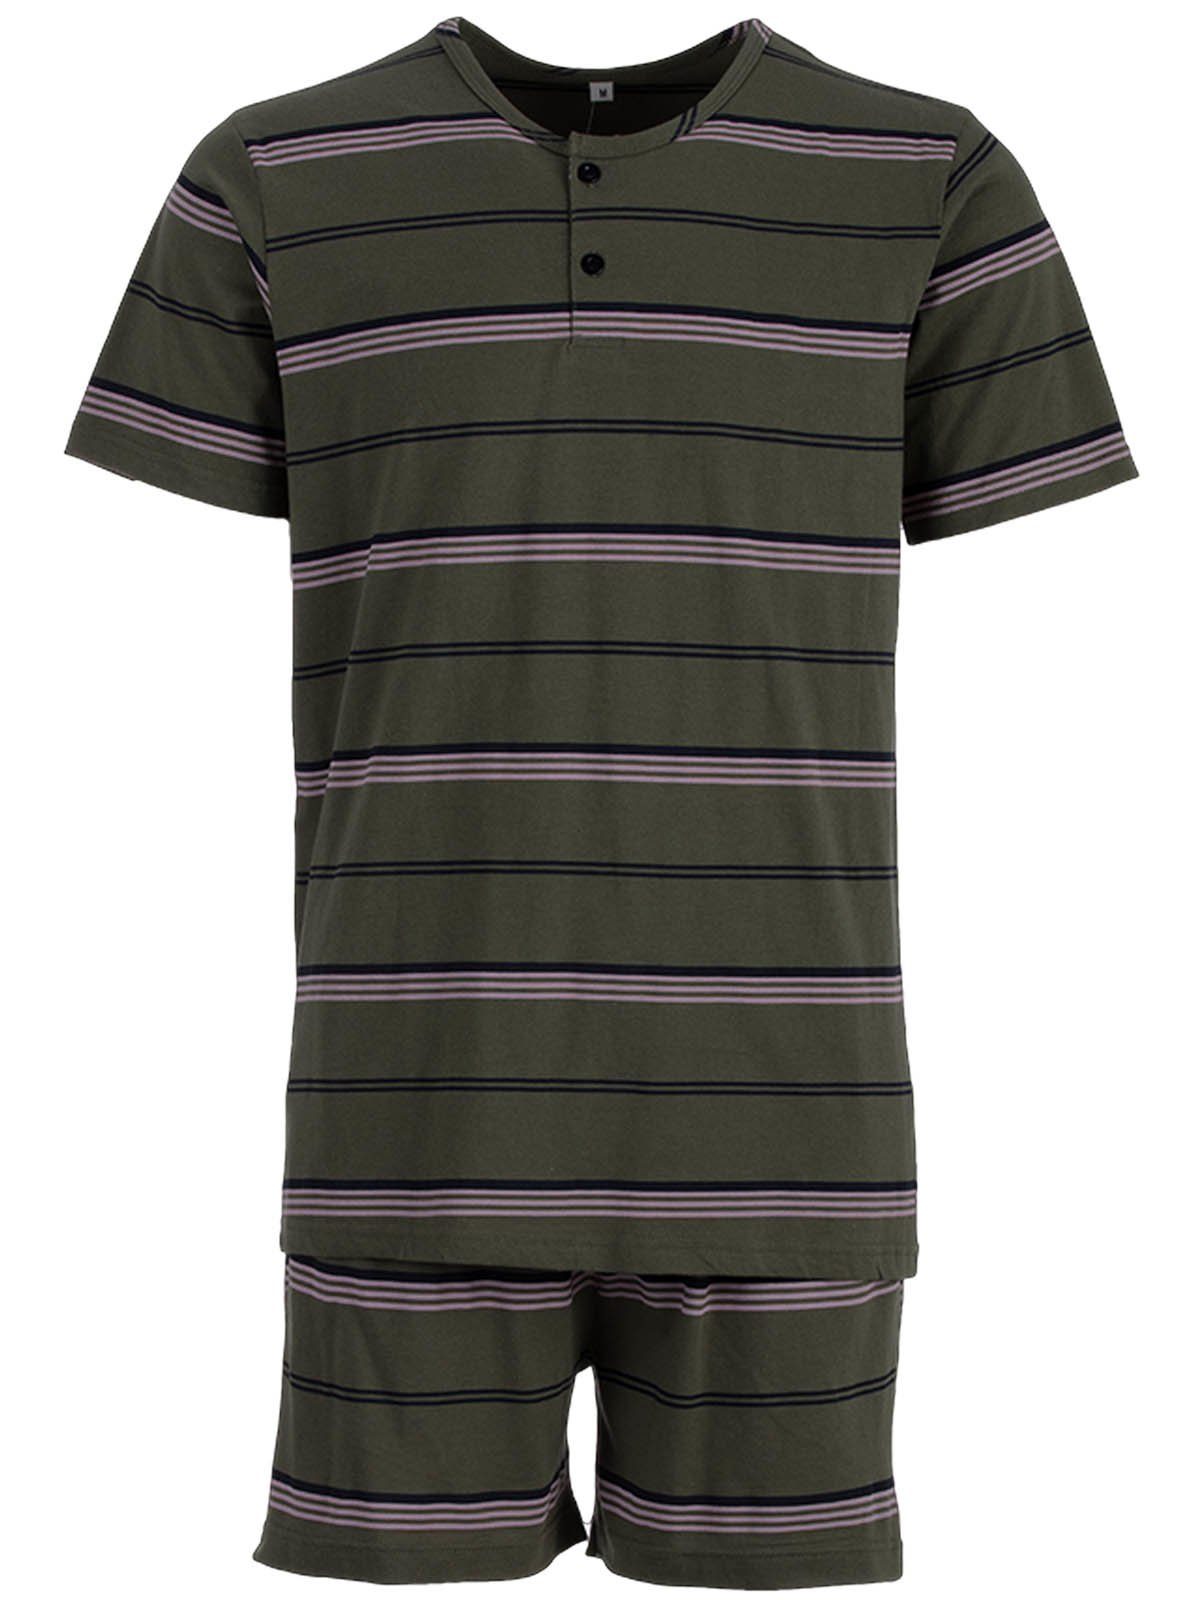 Henry Terre Schlafanzug Pyjama Set Shorty - Streifen olive